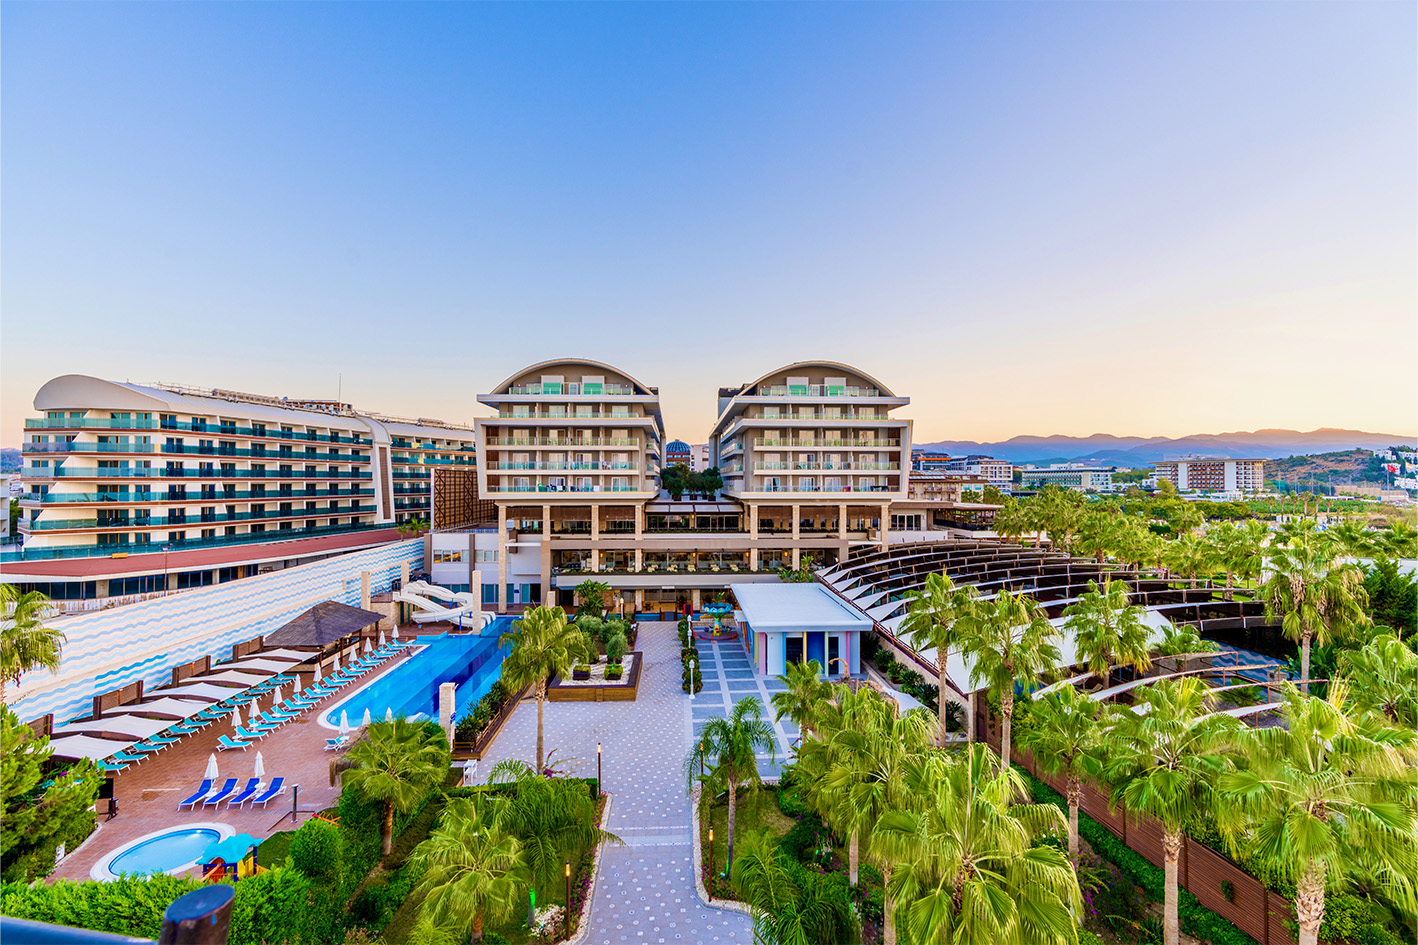 Adenya Resort Hotels & Spa